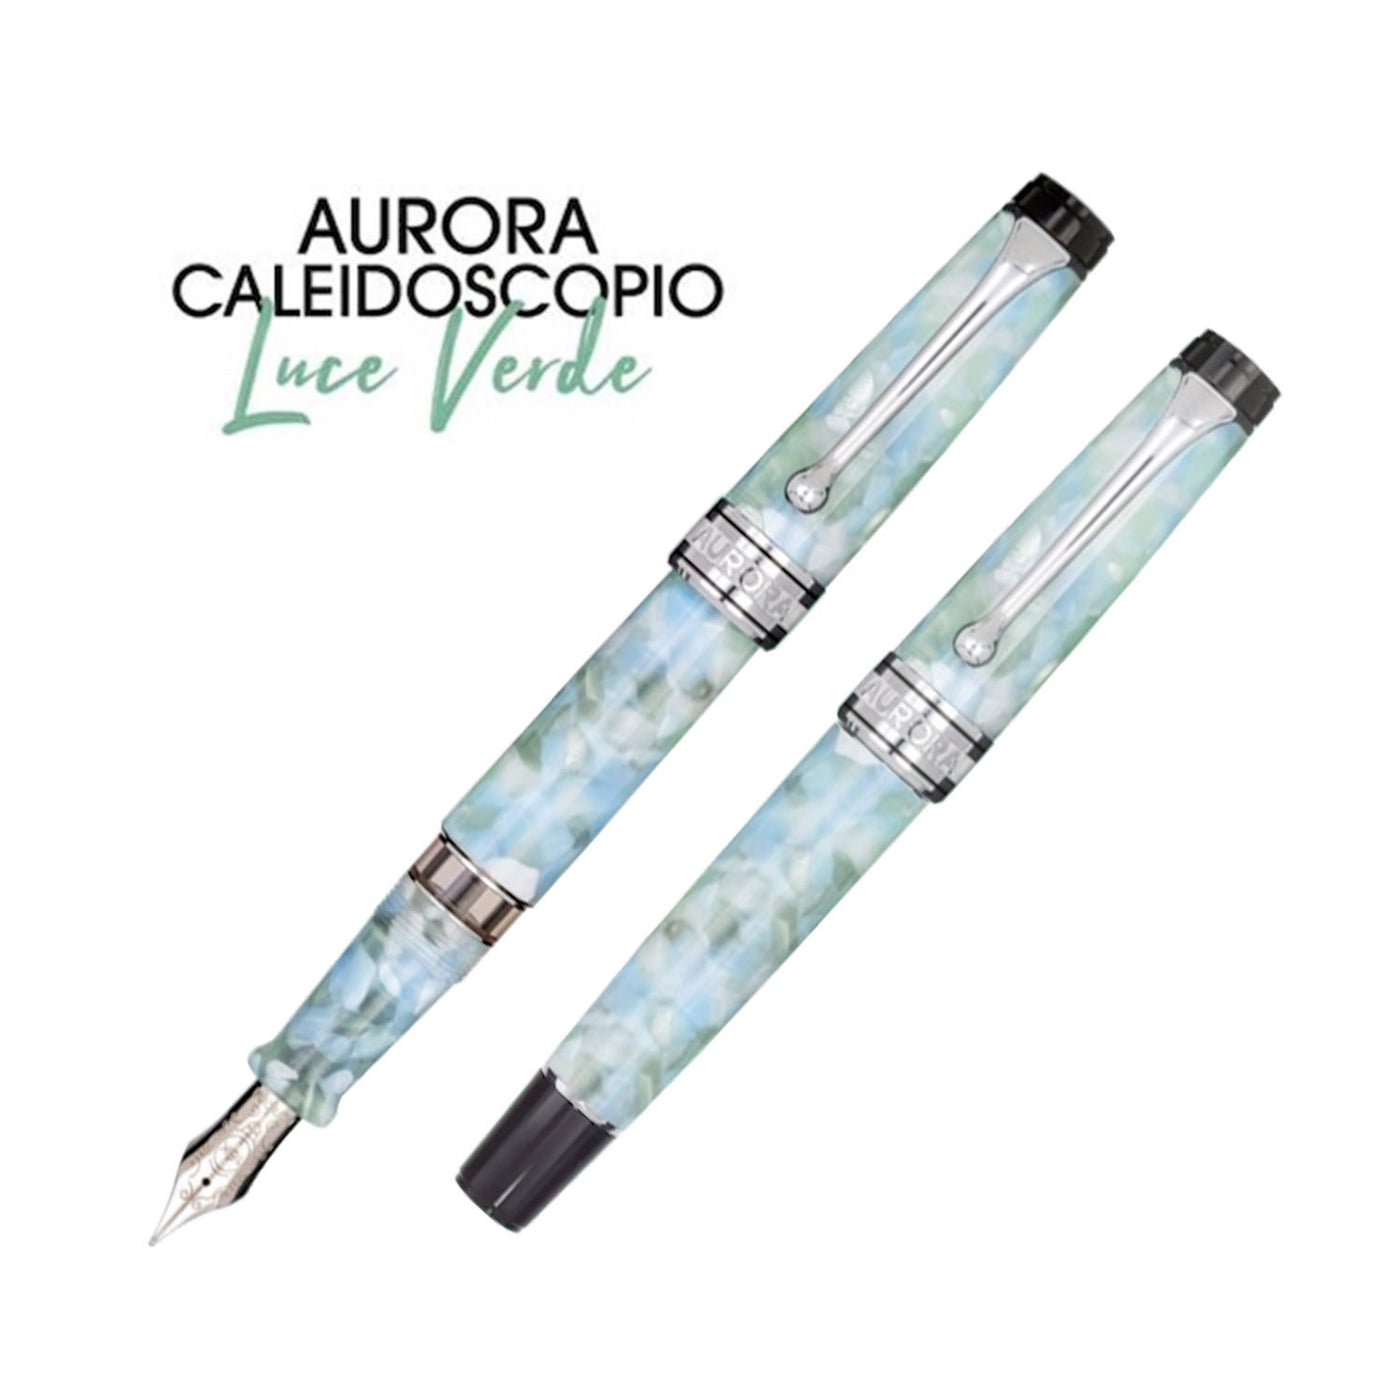 Aurora Optima Caleidoscopio Fountain Pen - Luce Verde (Limited Edition) 5